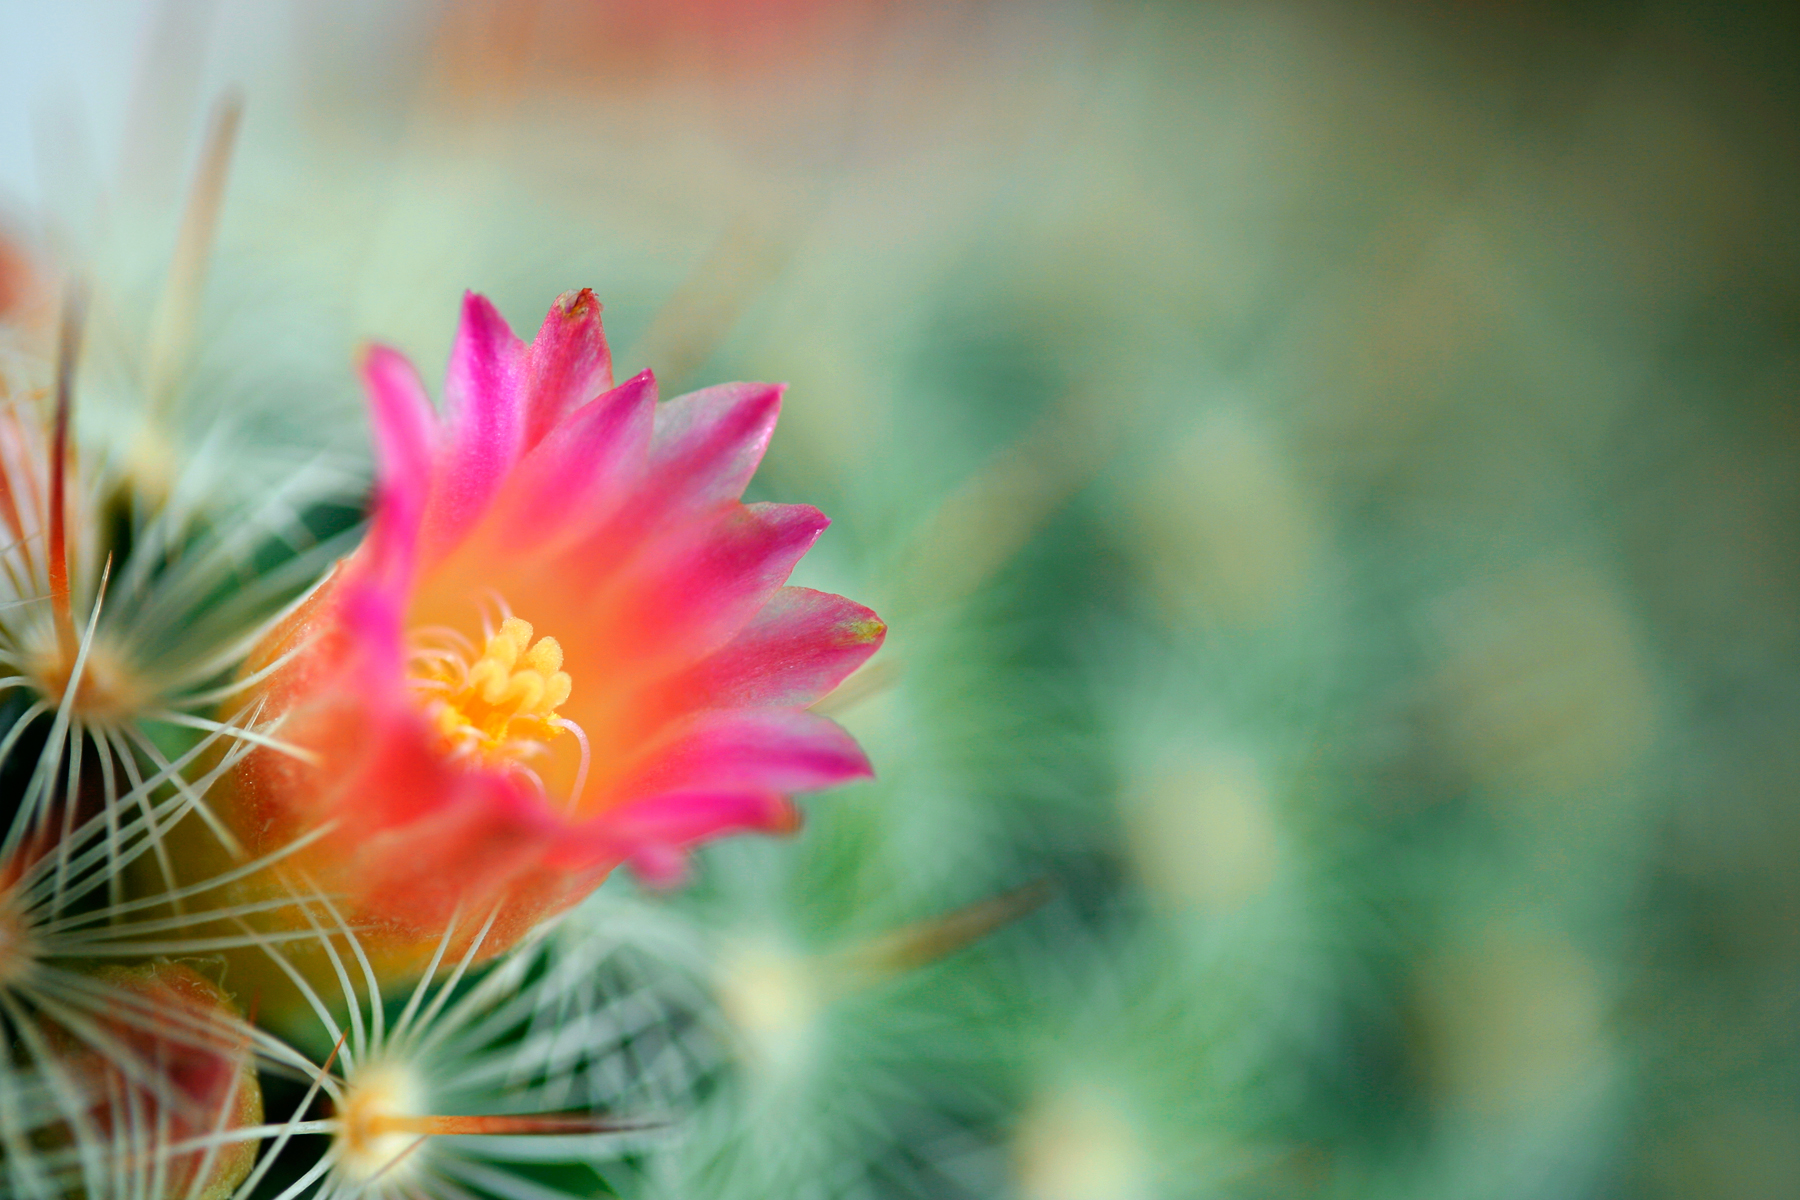 Cactus flower macro photo